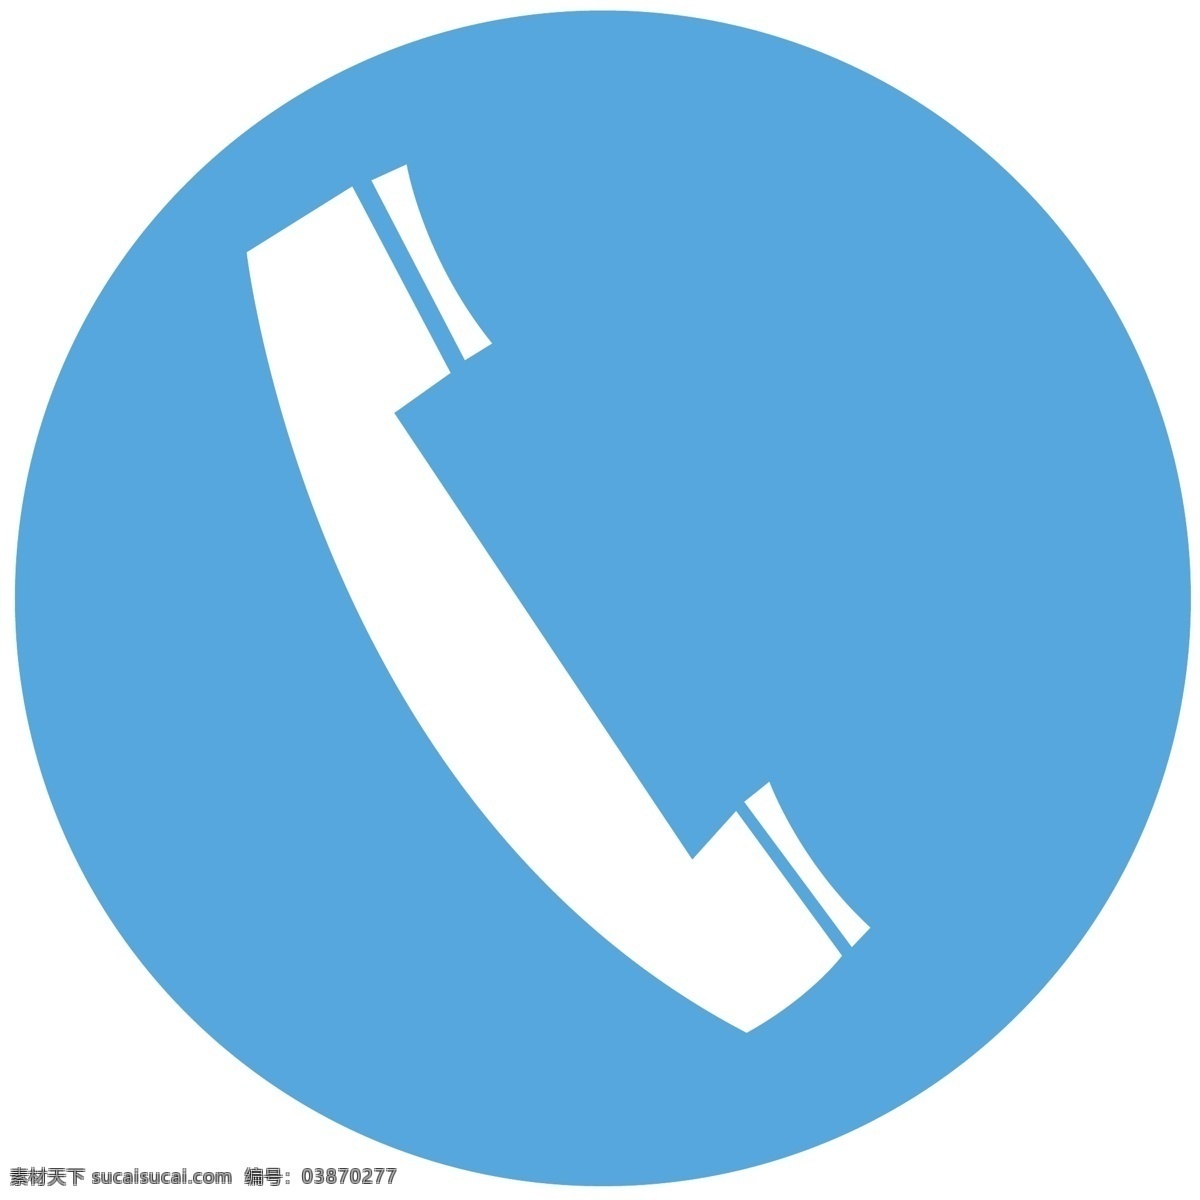 电话图标 logo 集合 logo设计